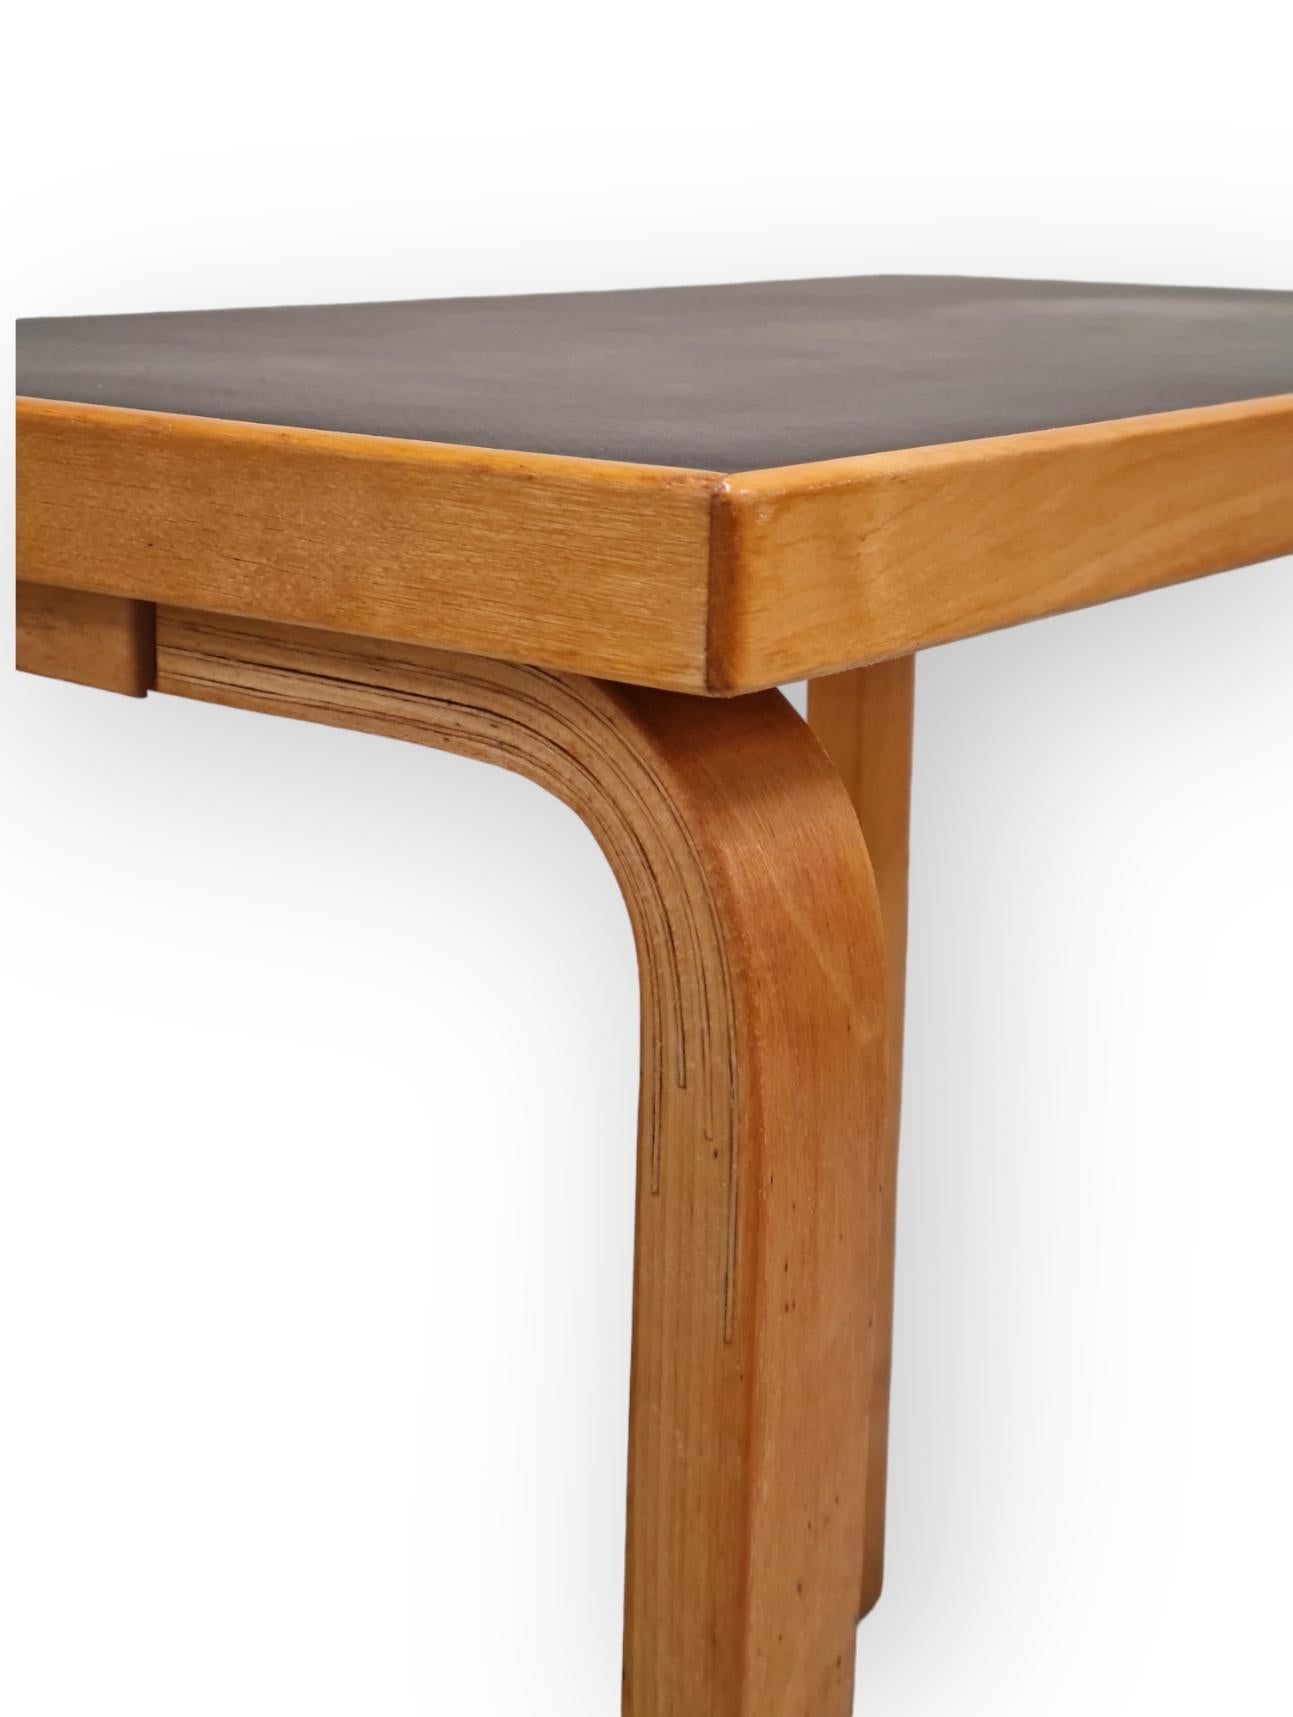 Alvar aalto Side Table Model 86 for Artek, 1930s In Good Condition For Sale In Helsinki, FI